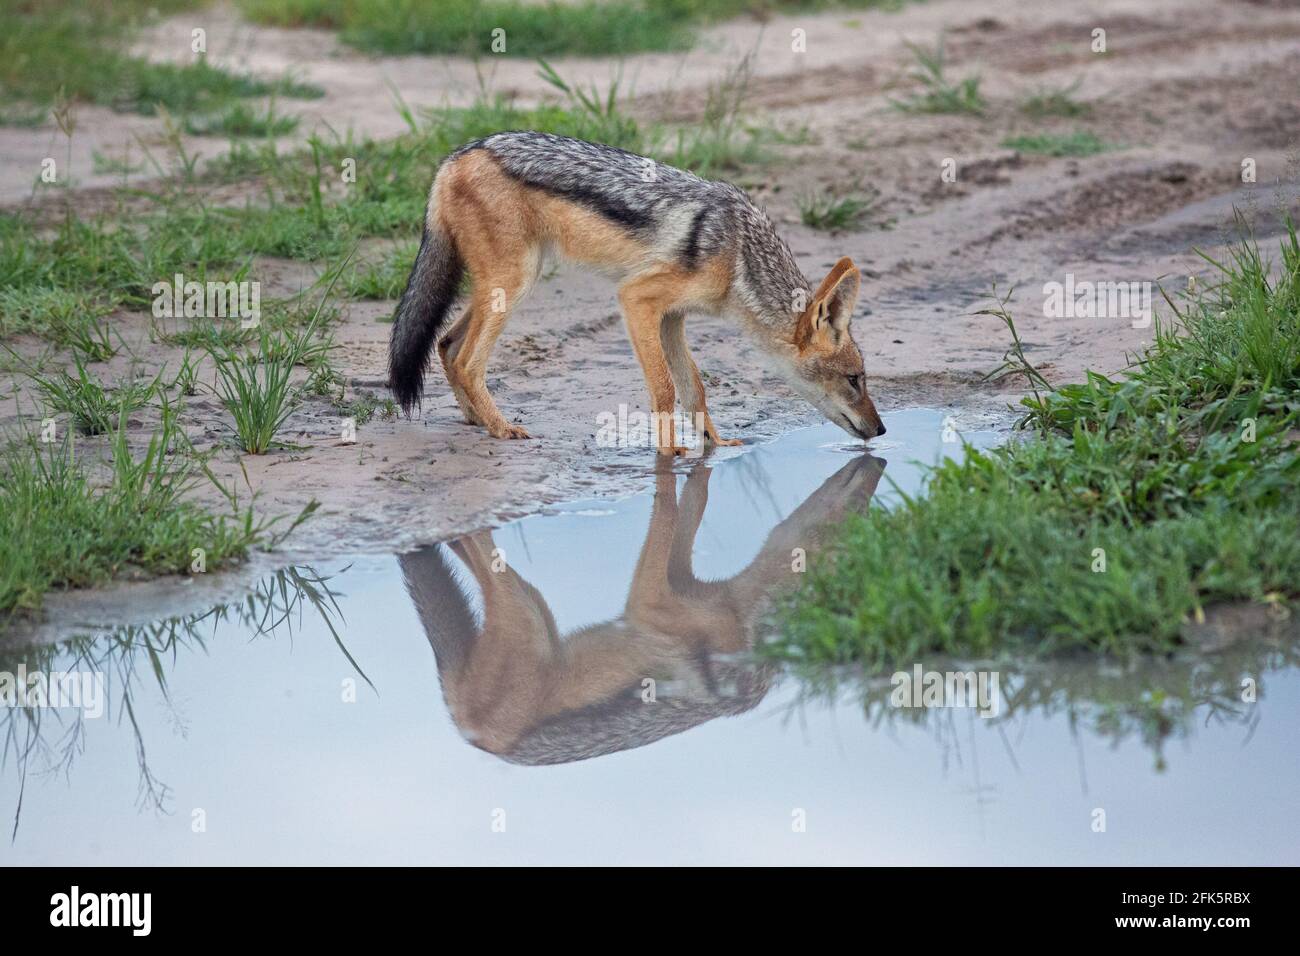 Black -backed Jackal (Canis mesomelas). Standing alongside a fresh water puddle left by recent rain shower. Drinking. Reflection of animal. Botswana. Stock Photo